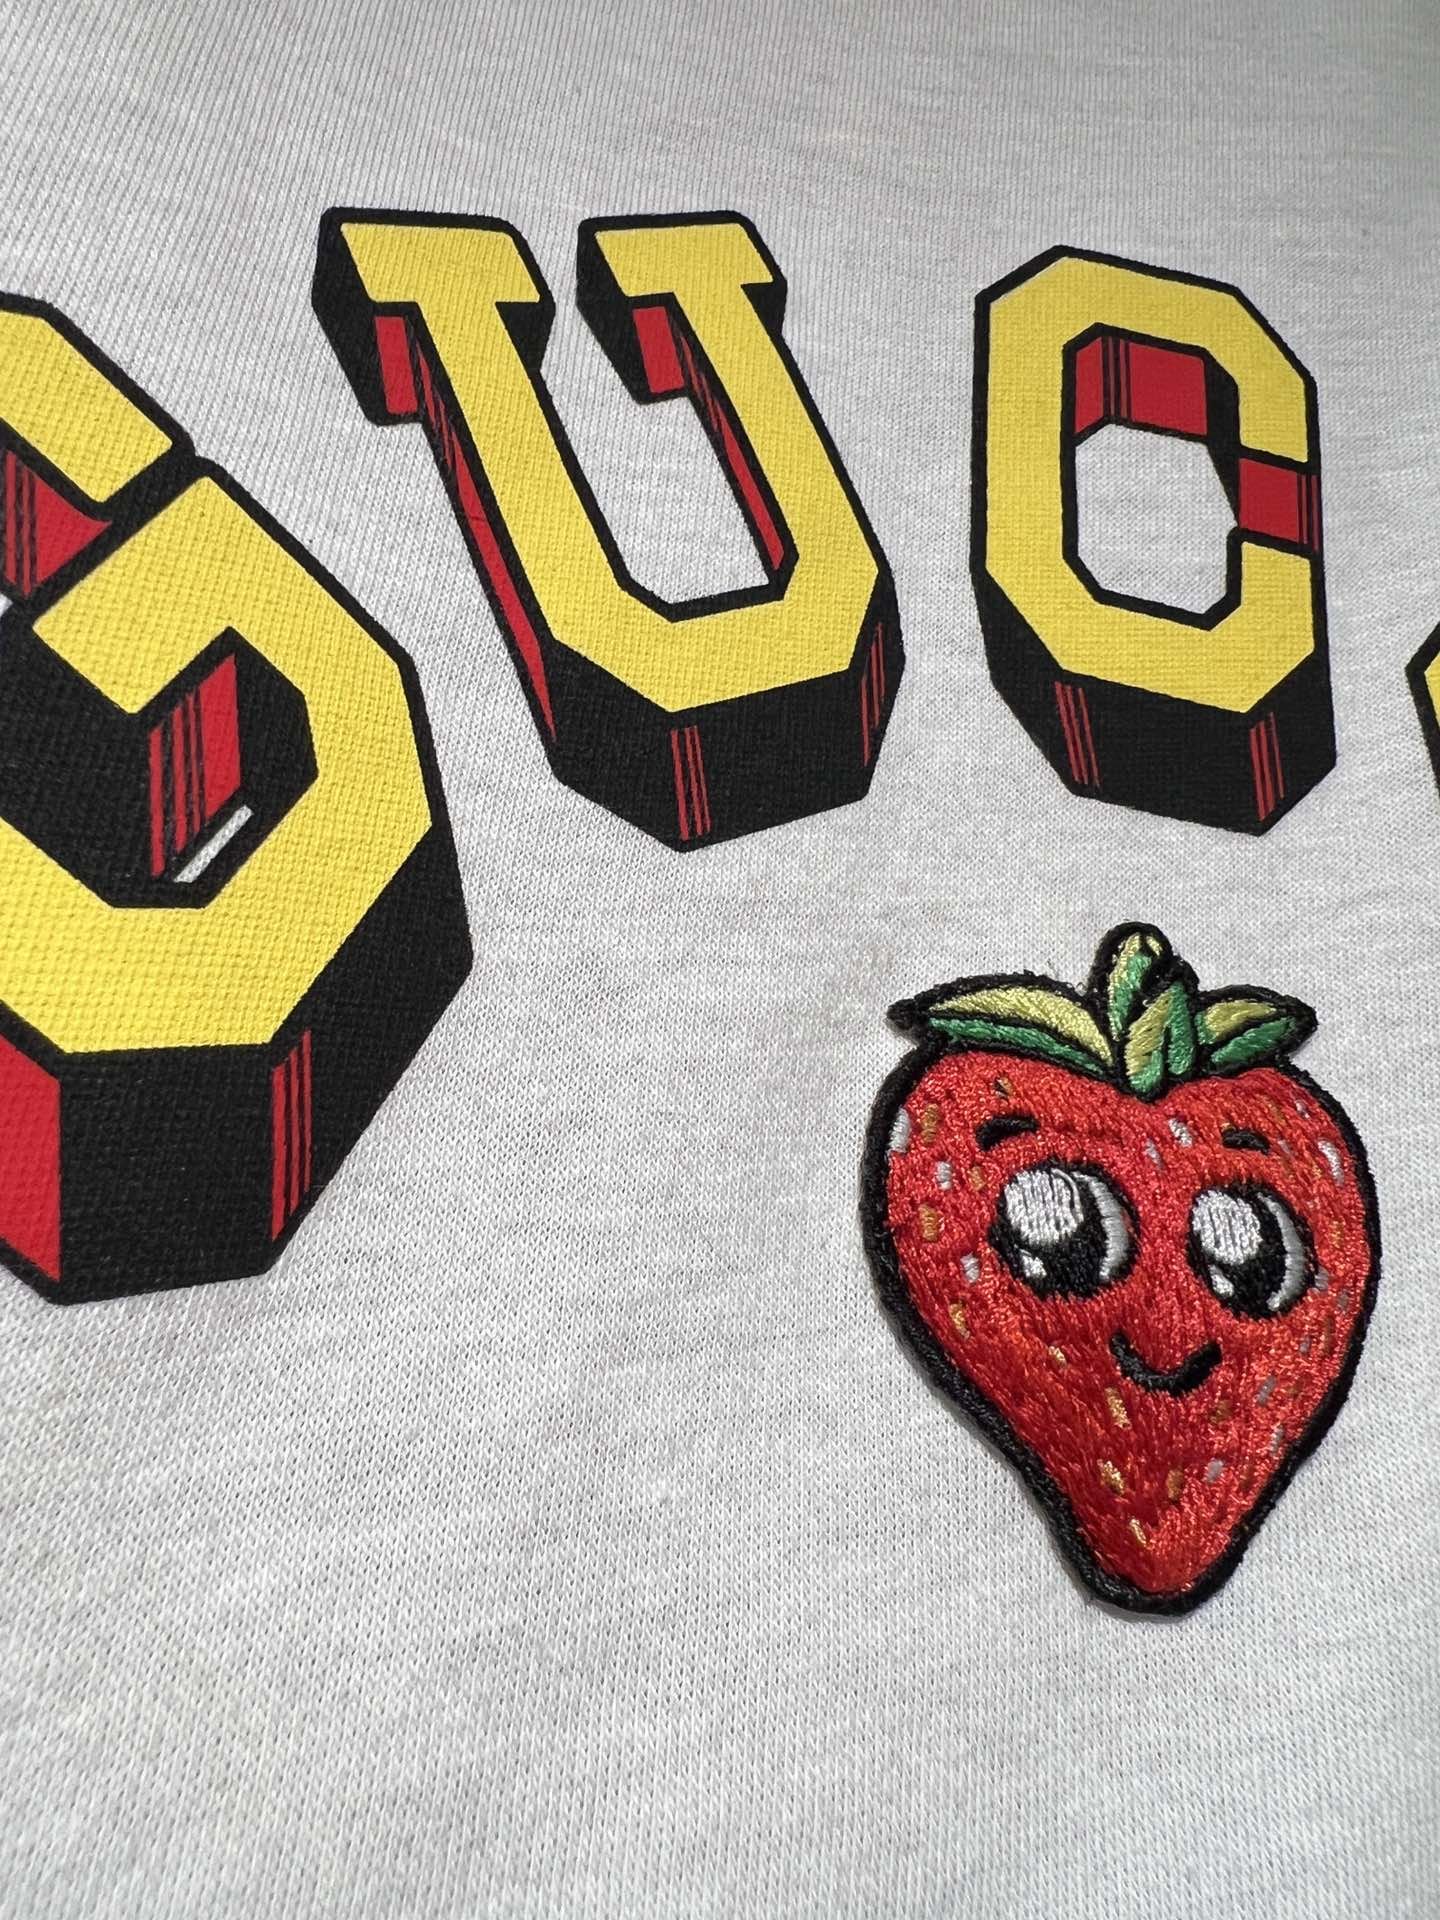 Gucc*T恤常规版型经典logo图标点缀满满的品牌气息红白拼接少女气息十足草莓卡通刺绣可爱又减龄码数S